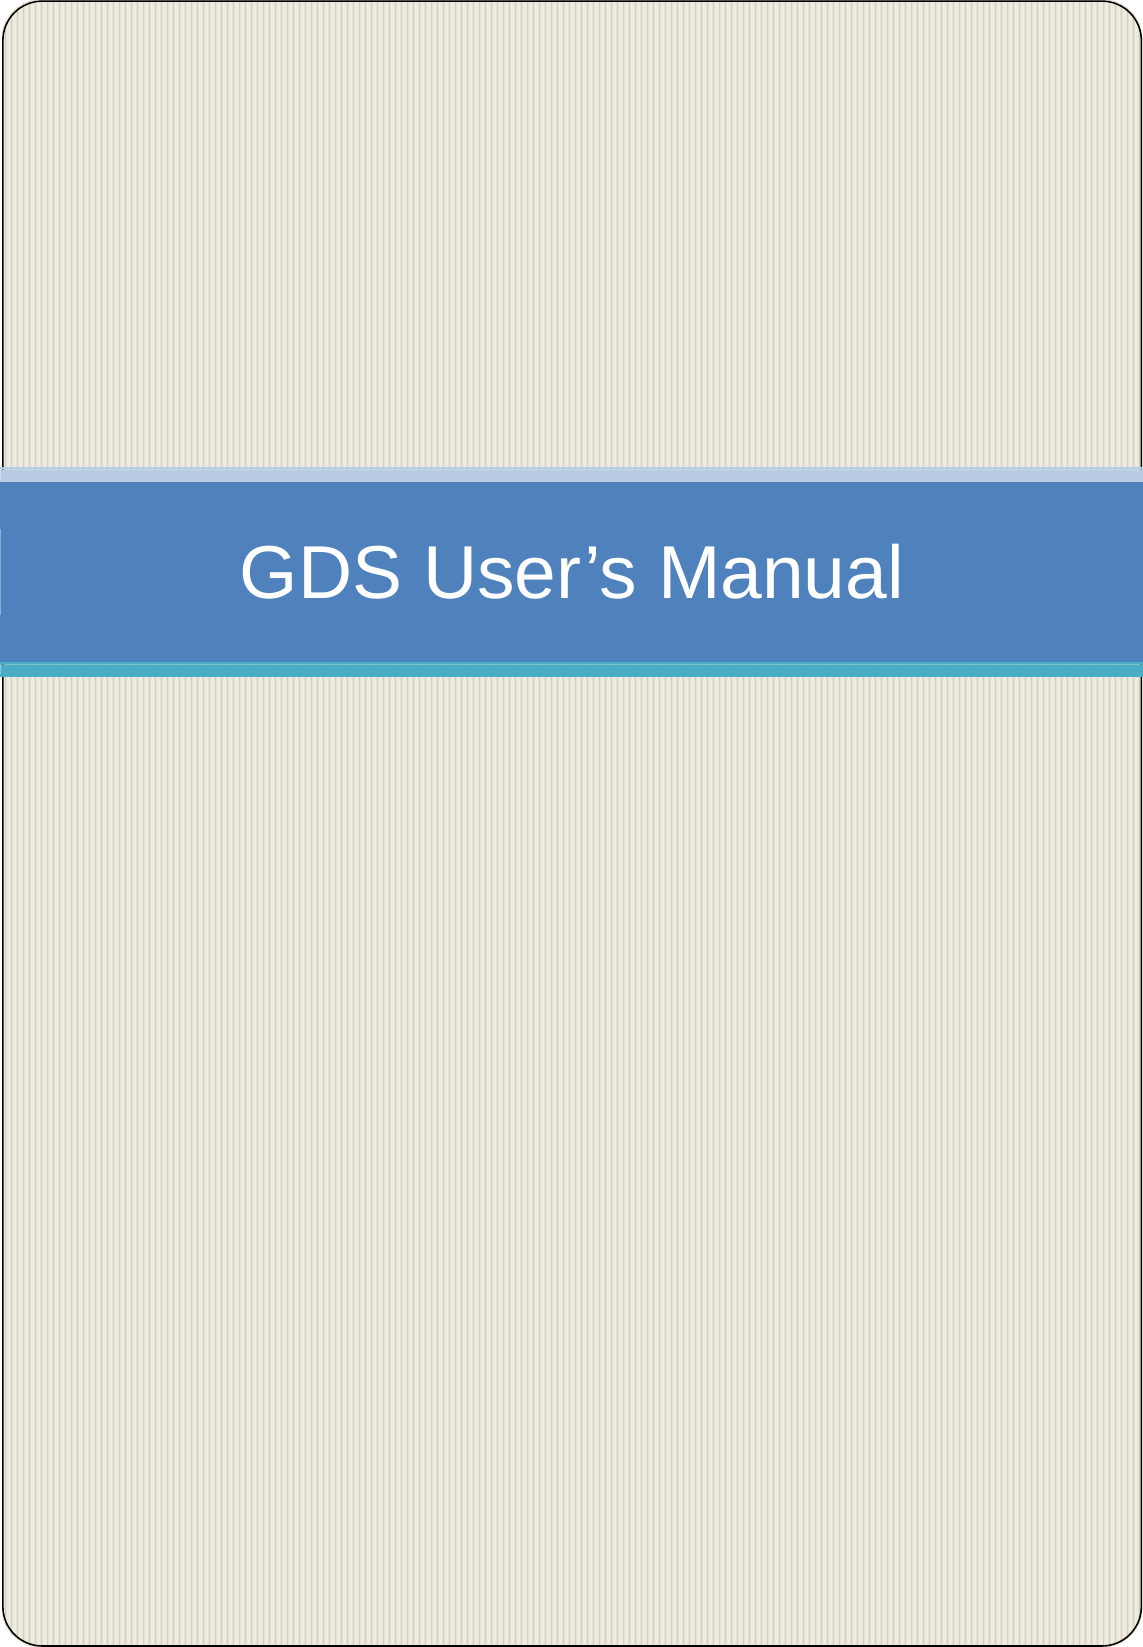   GDS User’s Manual  